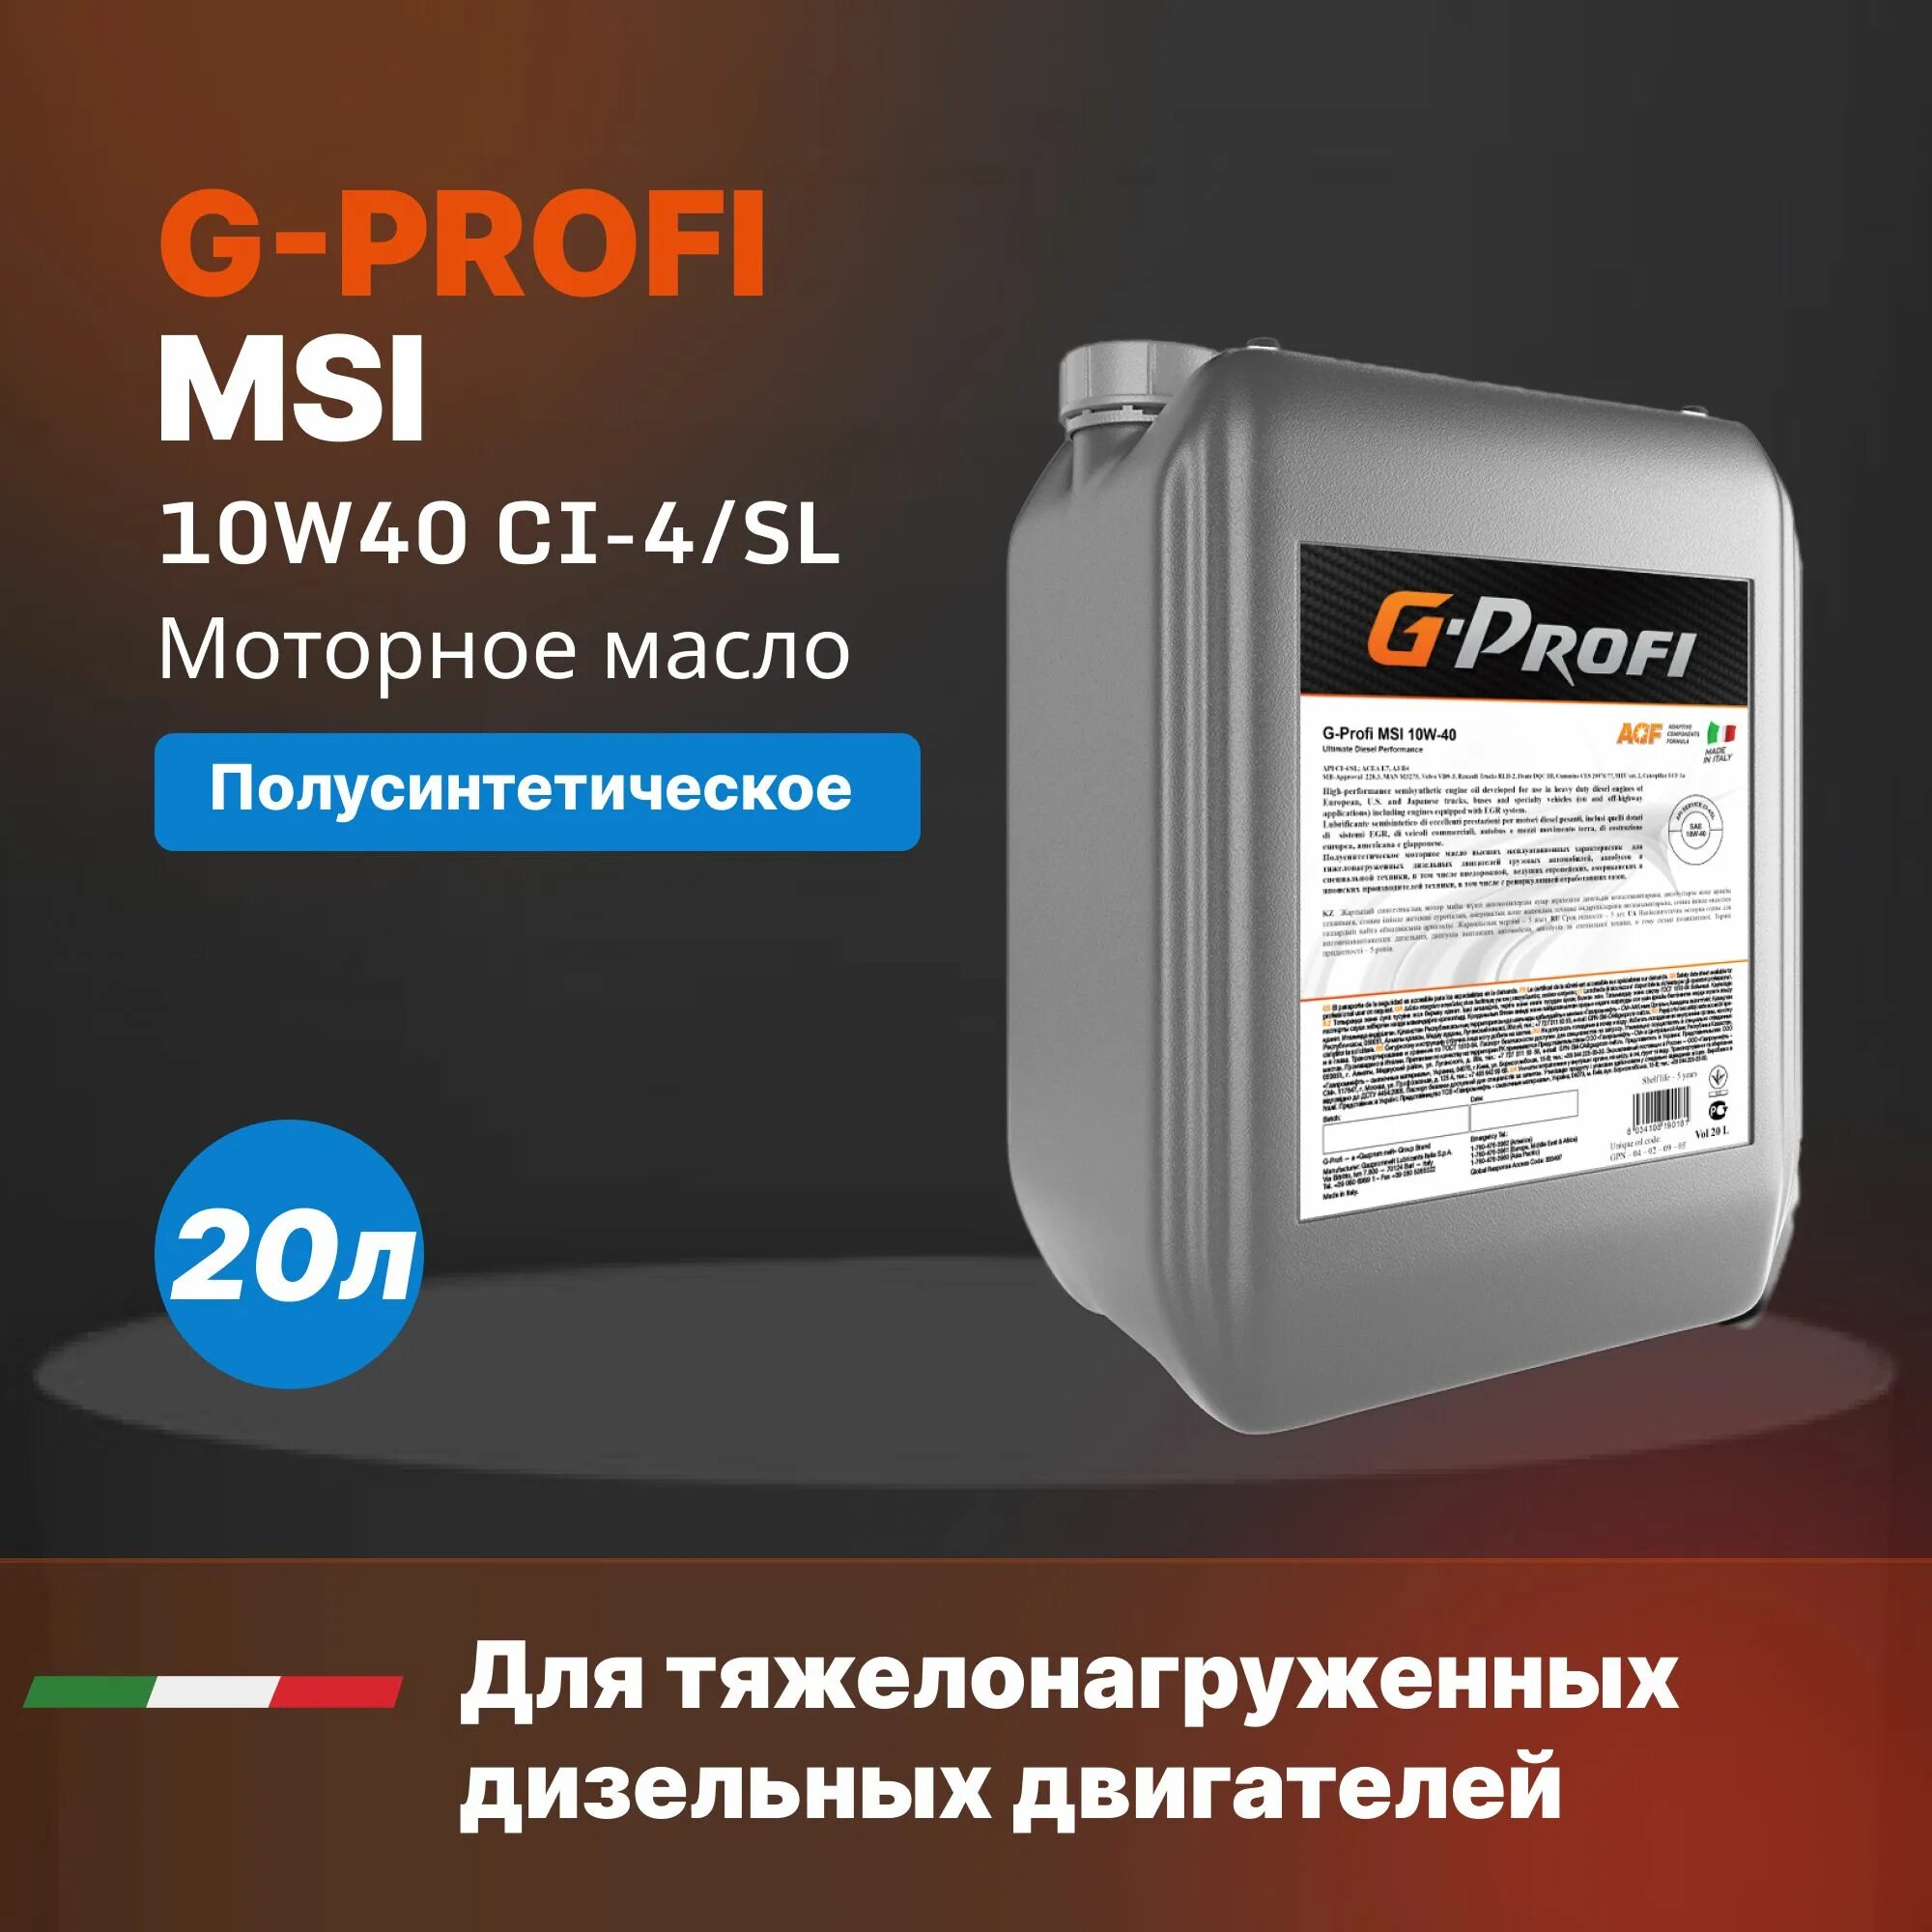 G Profi MSI 10w 40. G-Profi MSI 10w-40 205л. Масло g-Profi MSI 10w40 (205л/179 кг) весовой. G-Profi MSI 10w-40 20л.